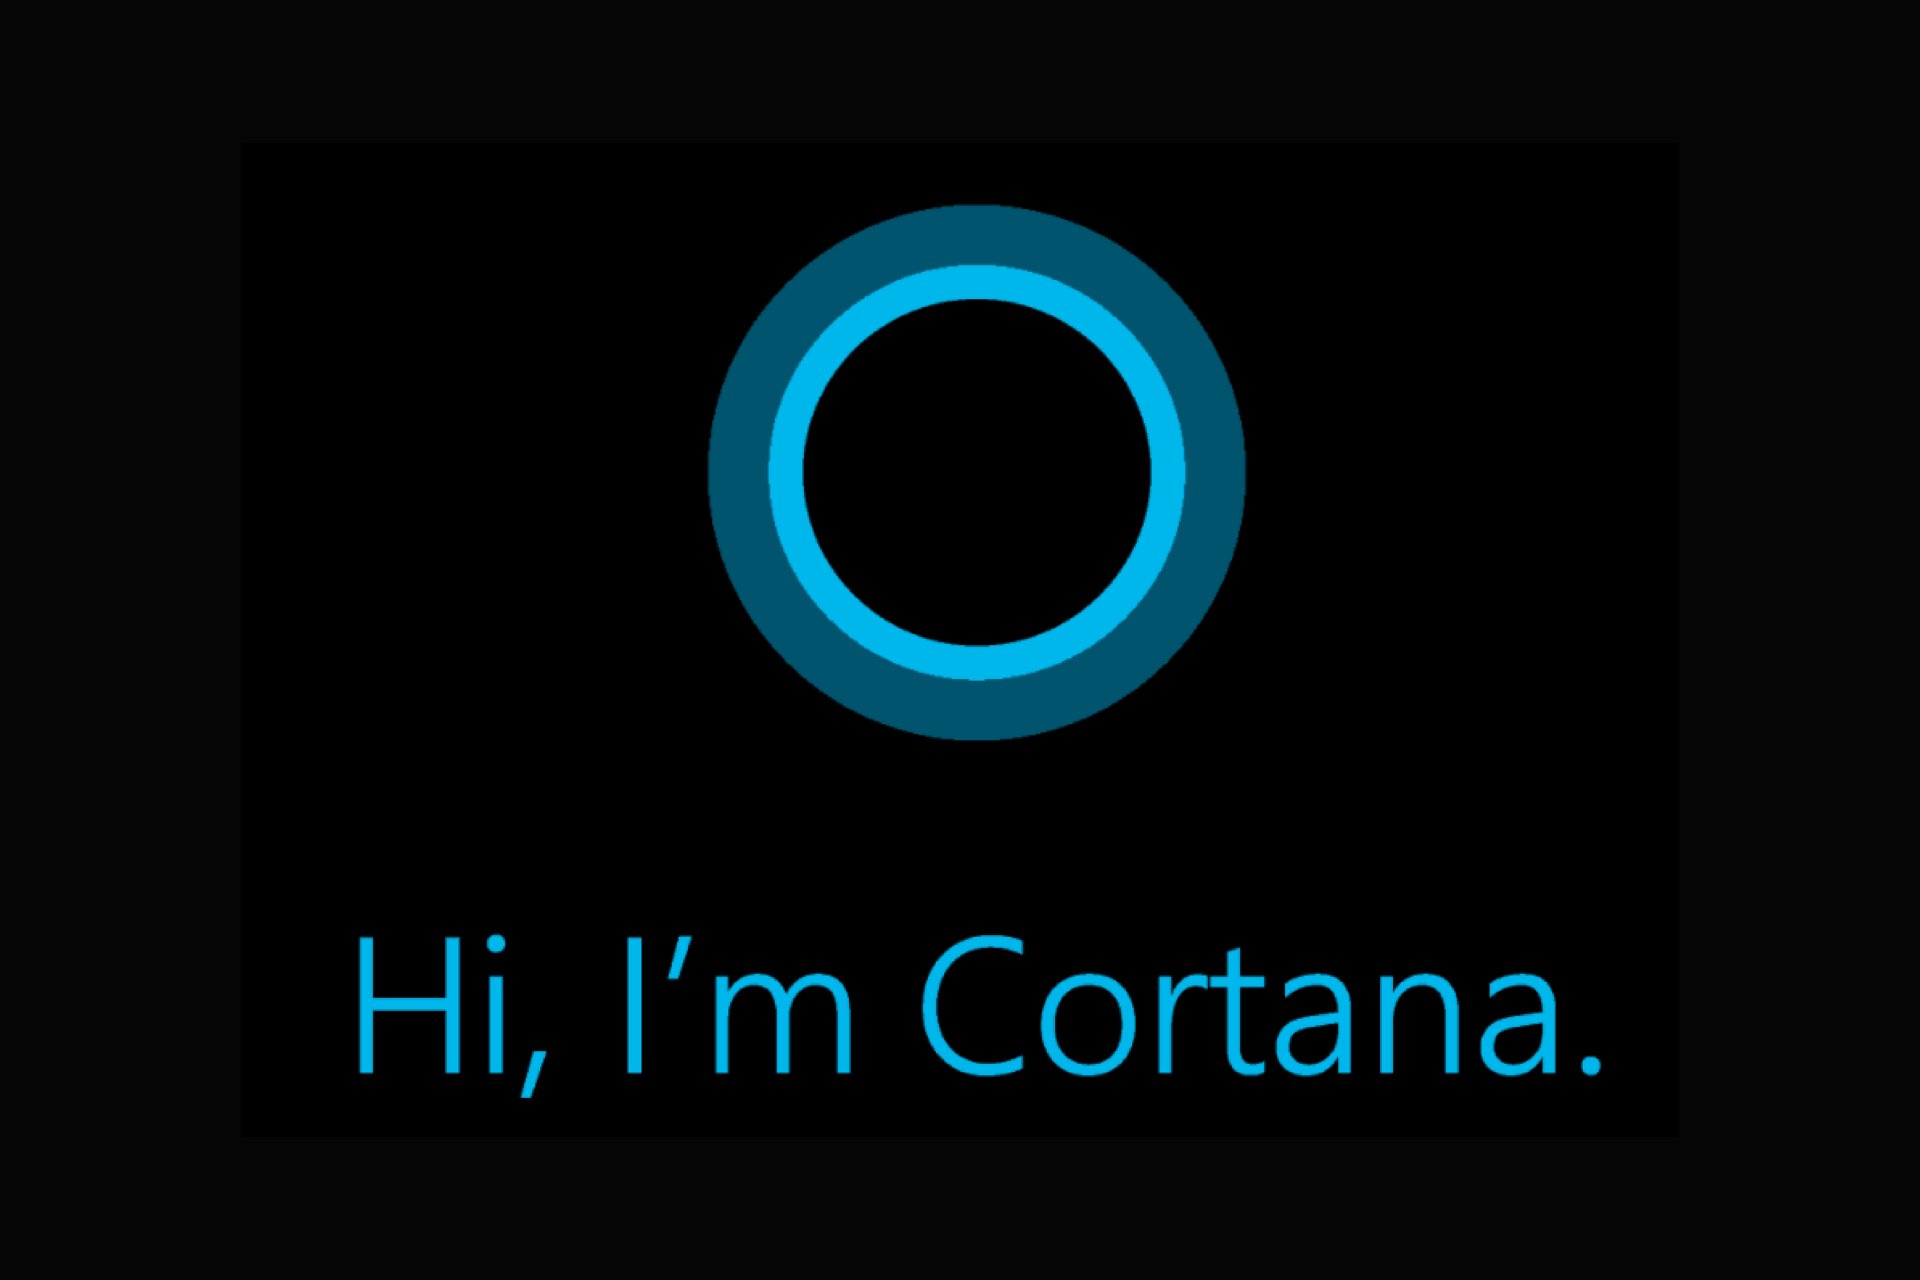 How can I enable Cortana